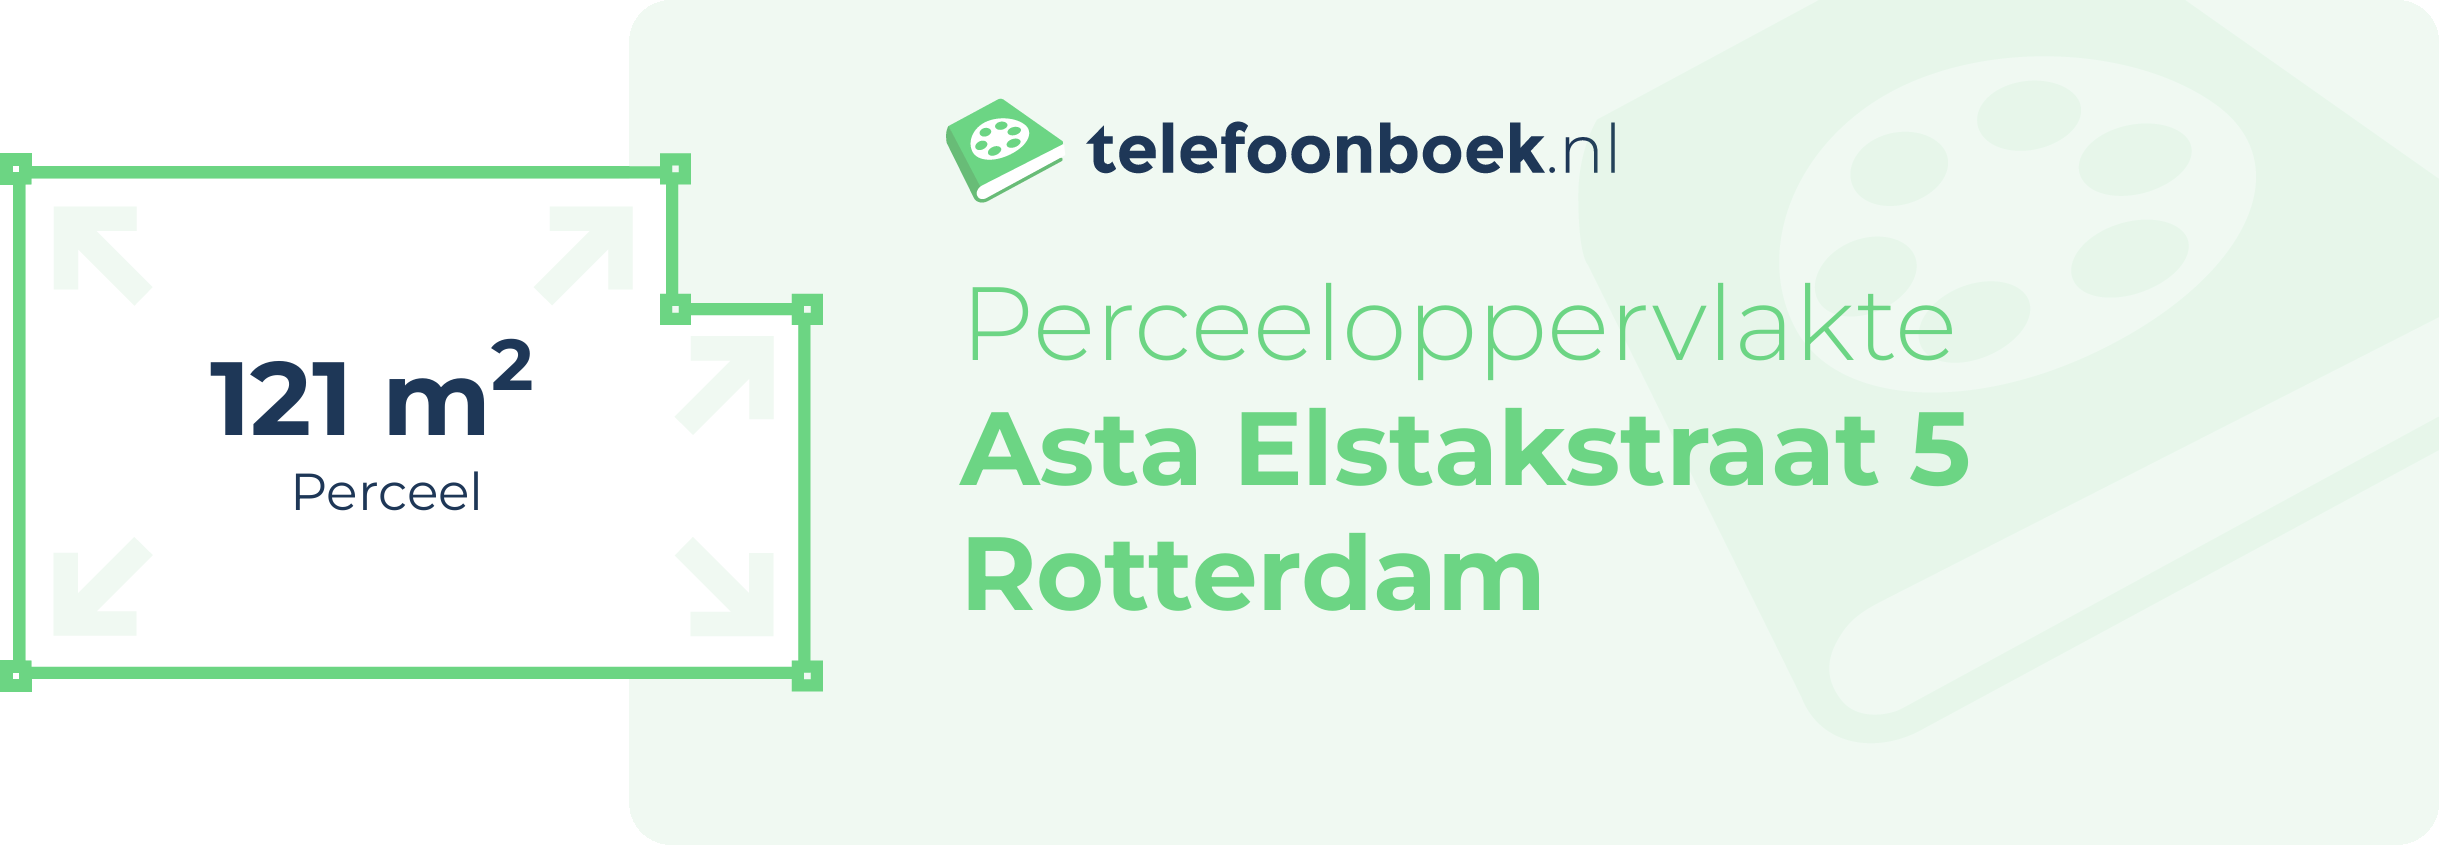 Perceeloppervlakte Asta Elstakstraat 5 Rotterdam